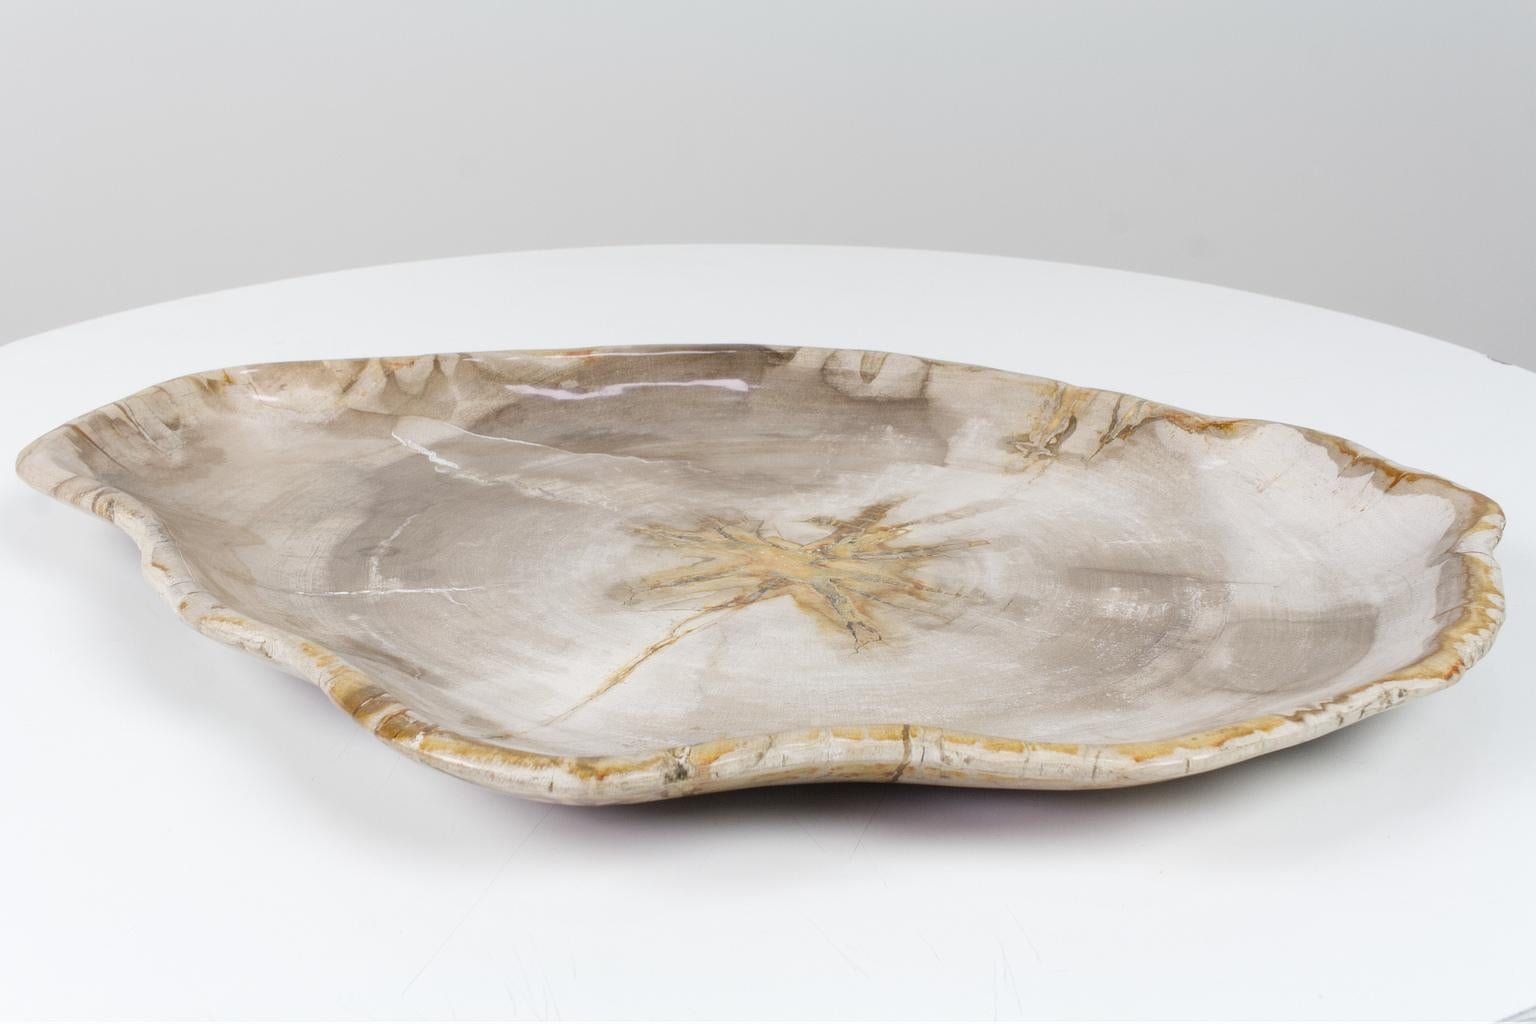 Indonesian Large Petrified Wooden Plate in Beige Tones, Object Organic Origin